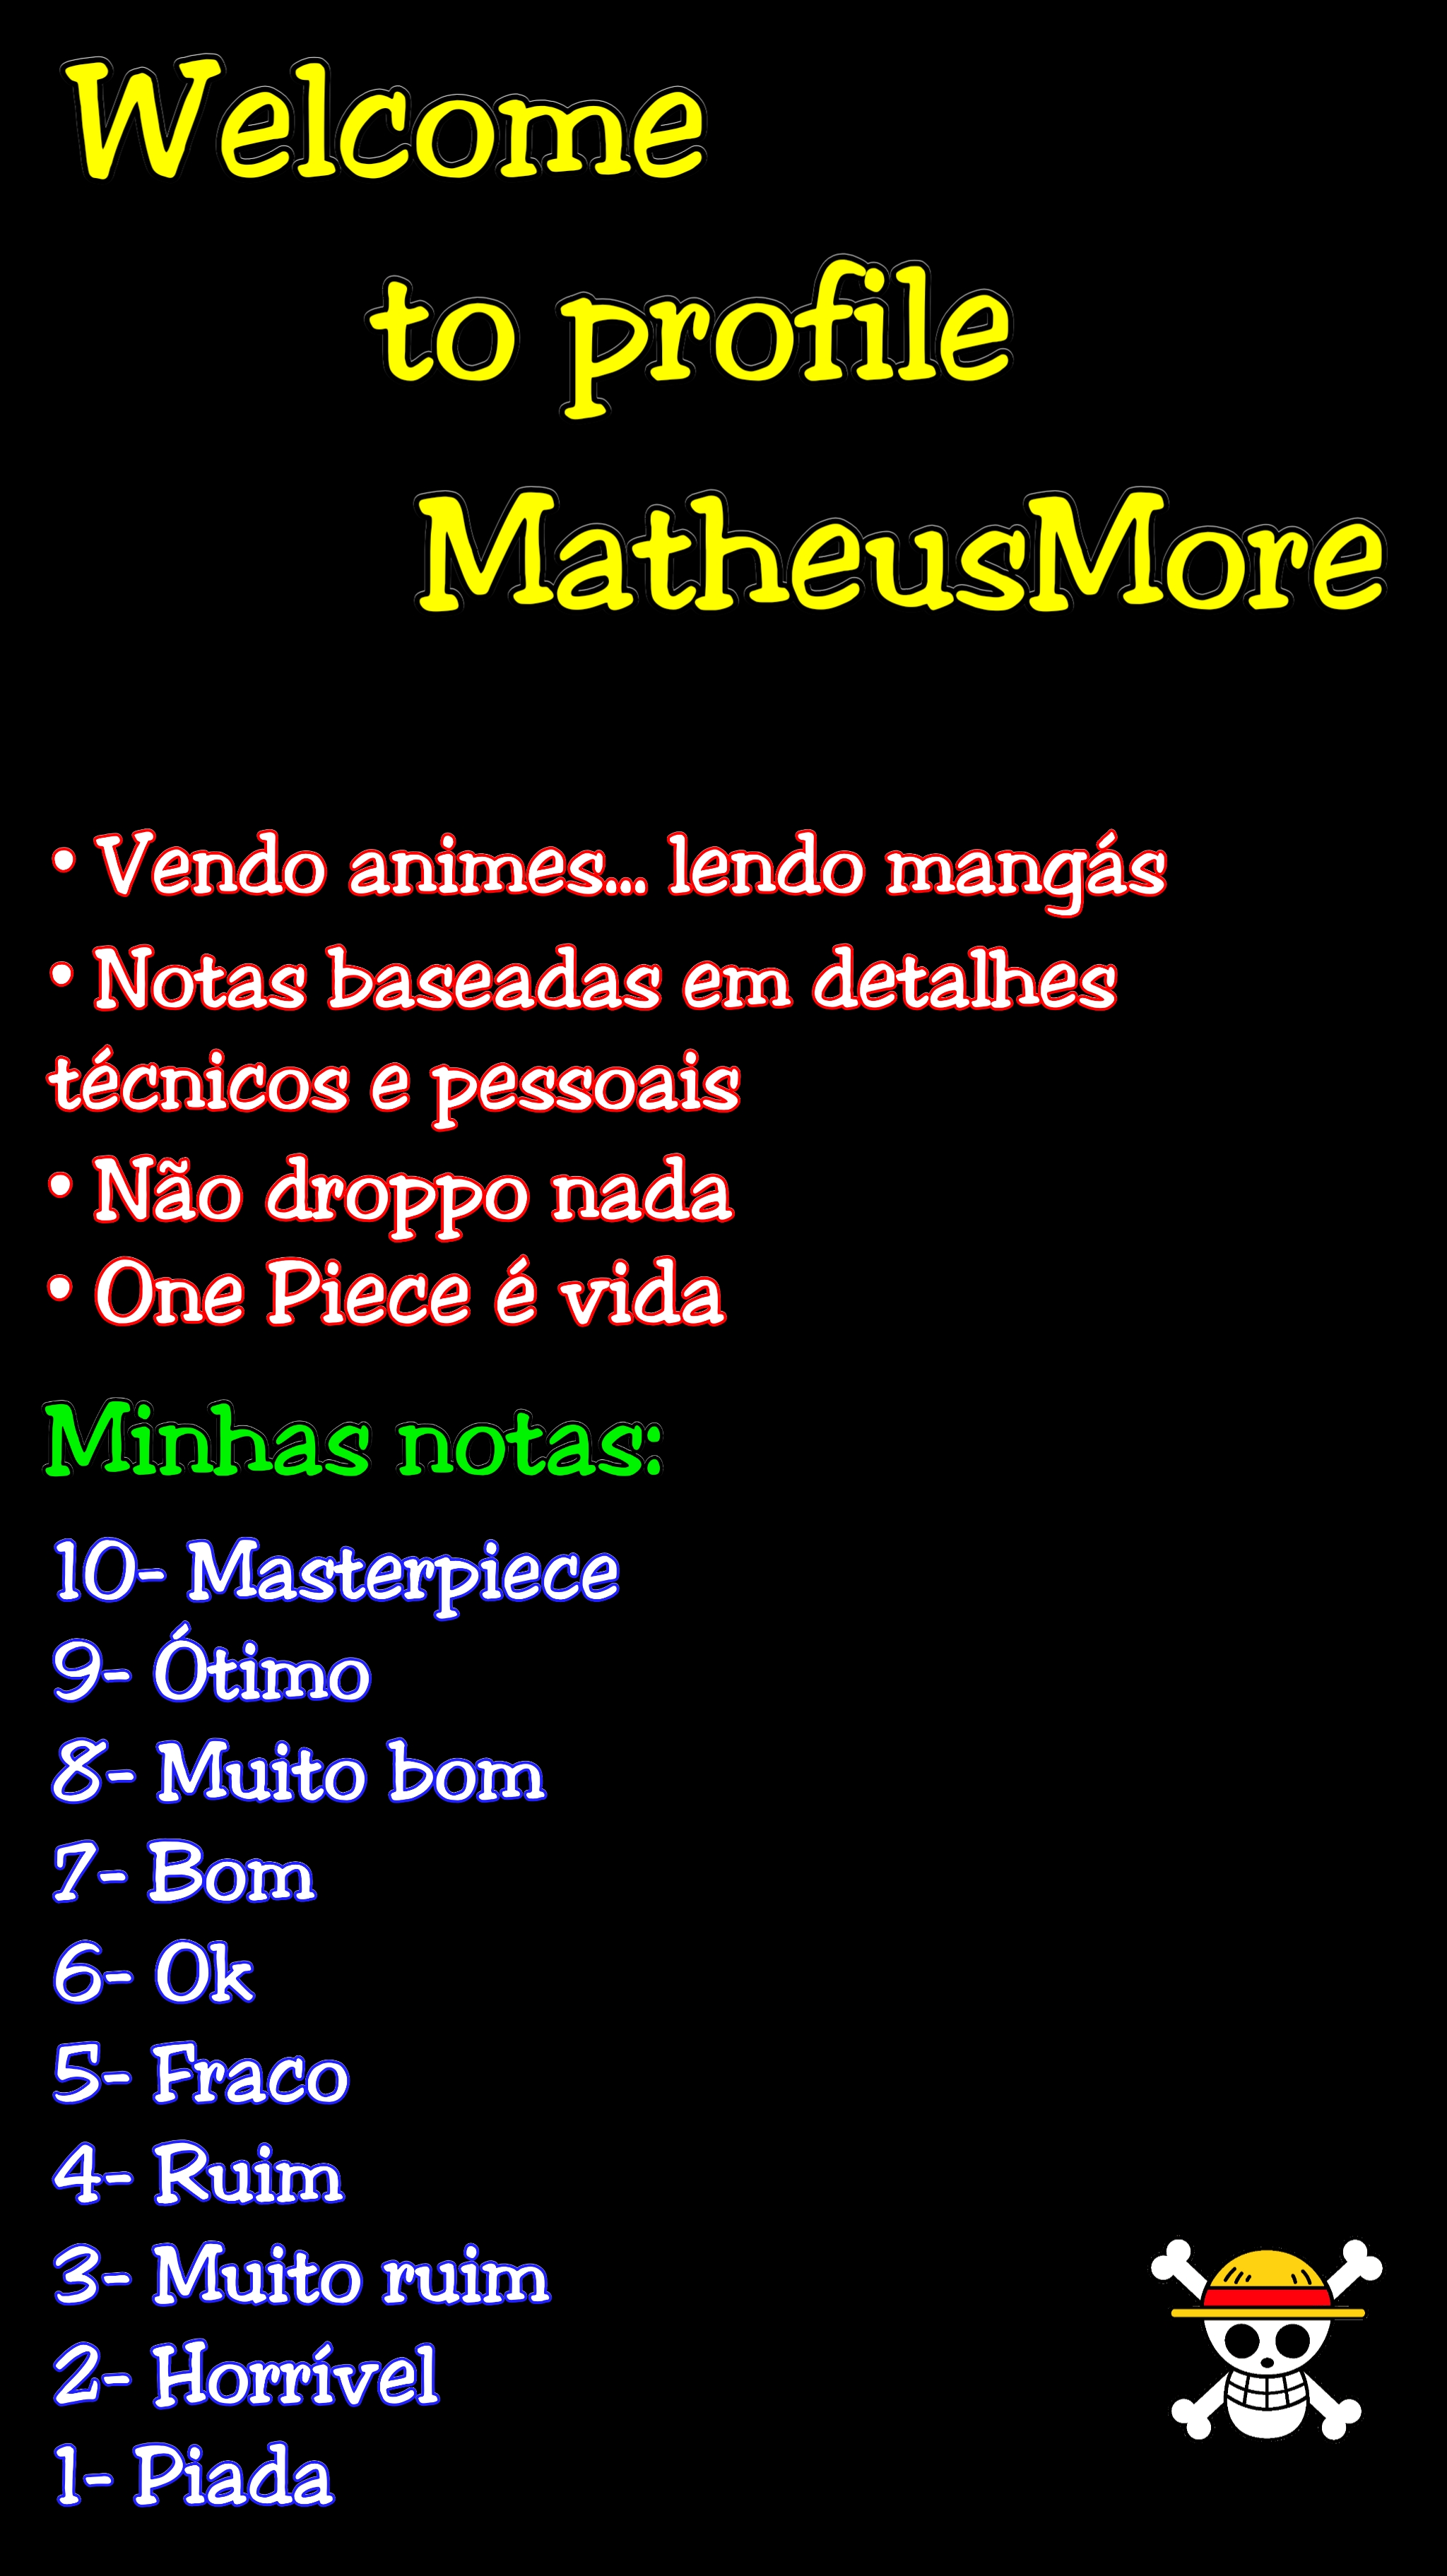 MatheusMore's Profile 